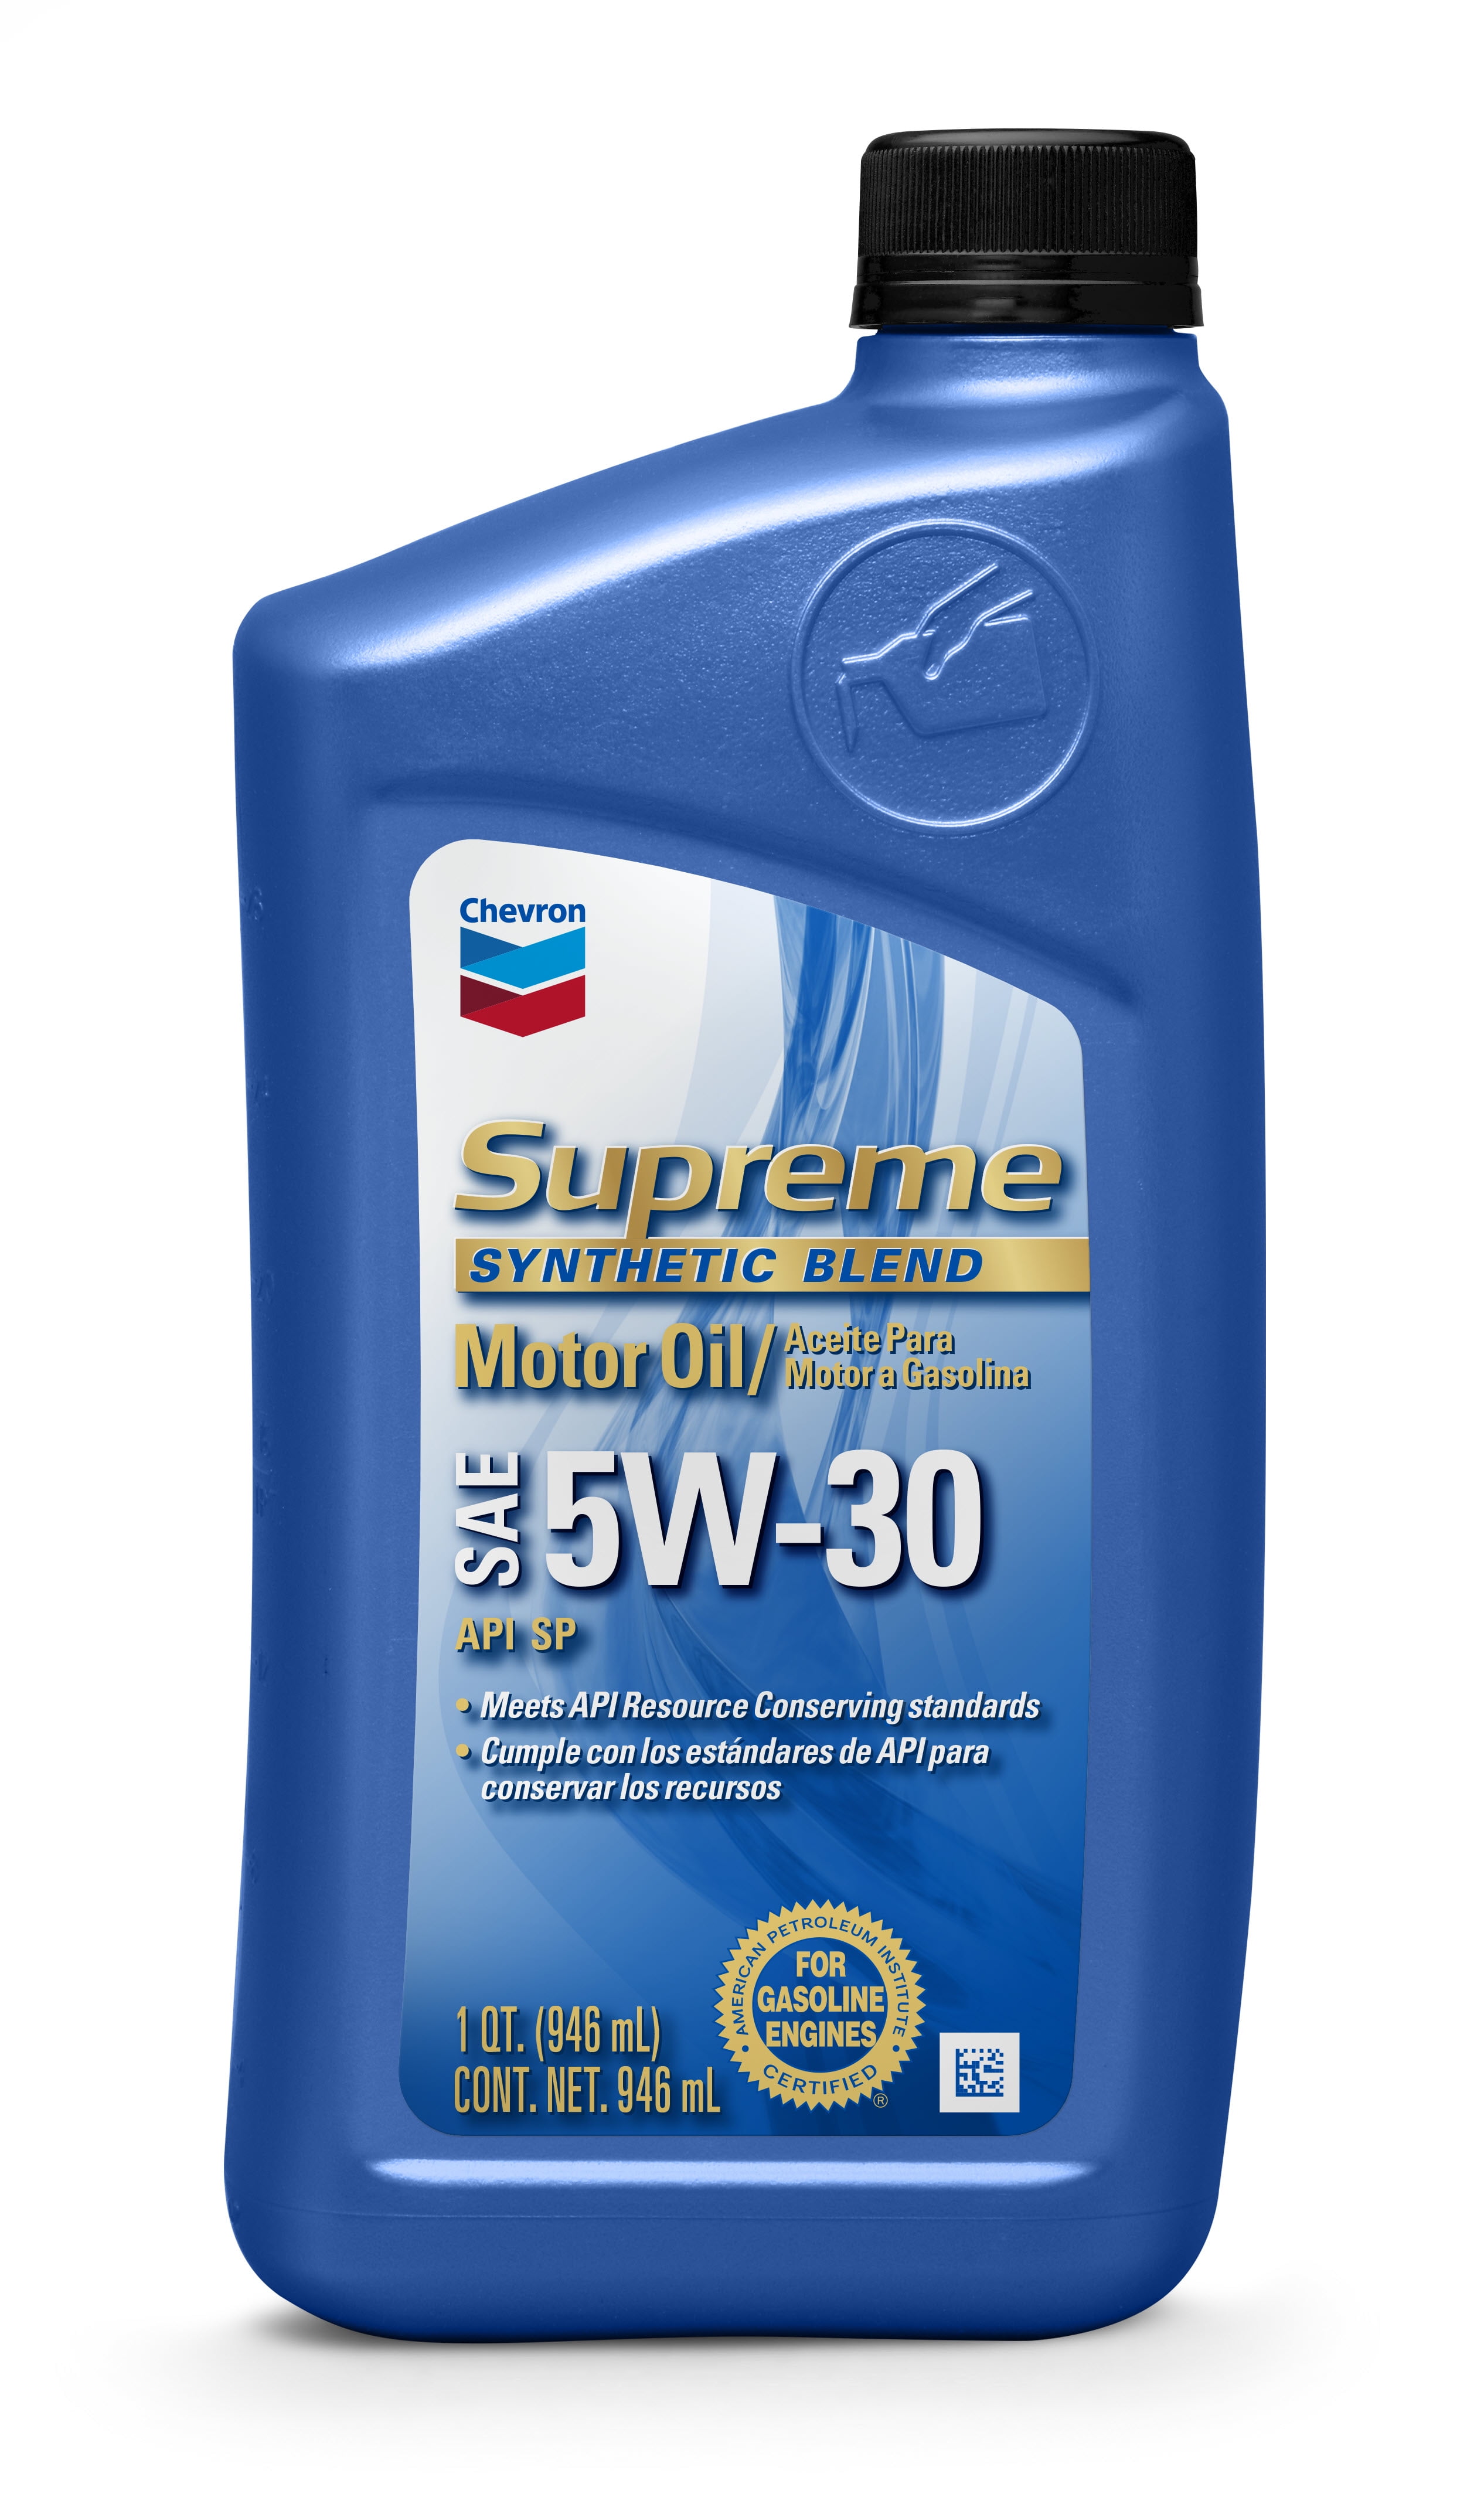 chevron-supreme-synthetic-blend-motor-oil-5w-30-1-quart-walmart